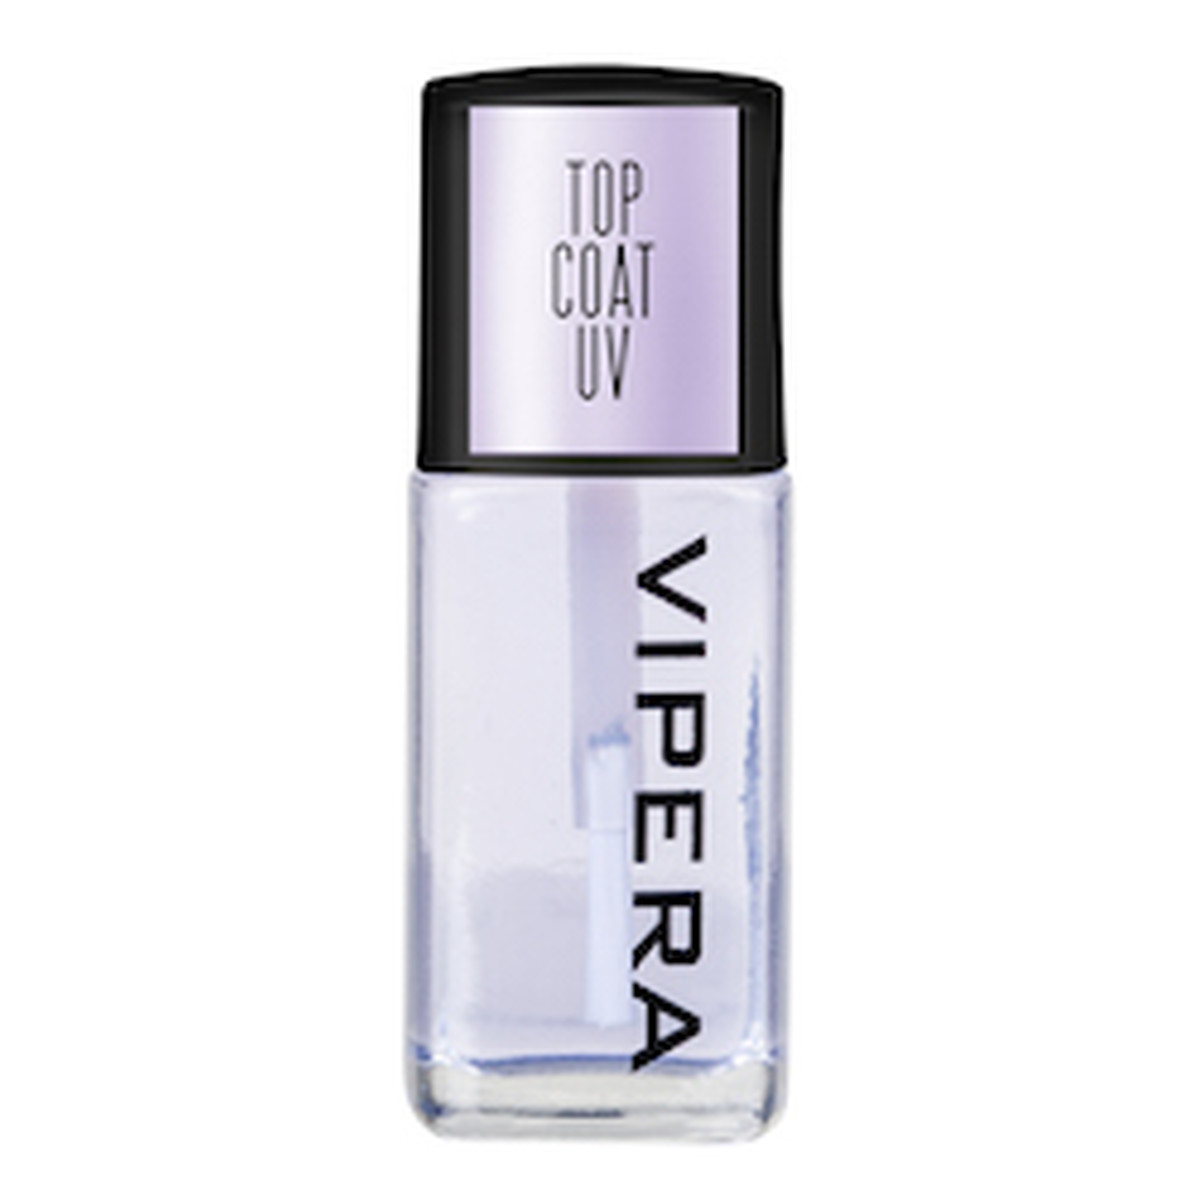 Vipera Top Coat Neon UV preparat do utrwalania lakieru 12ml